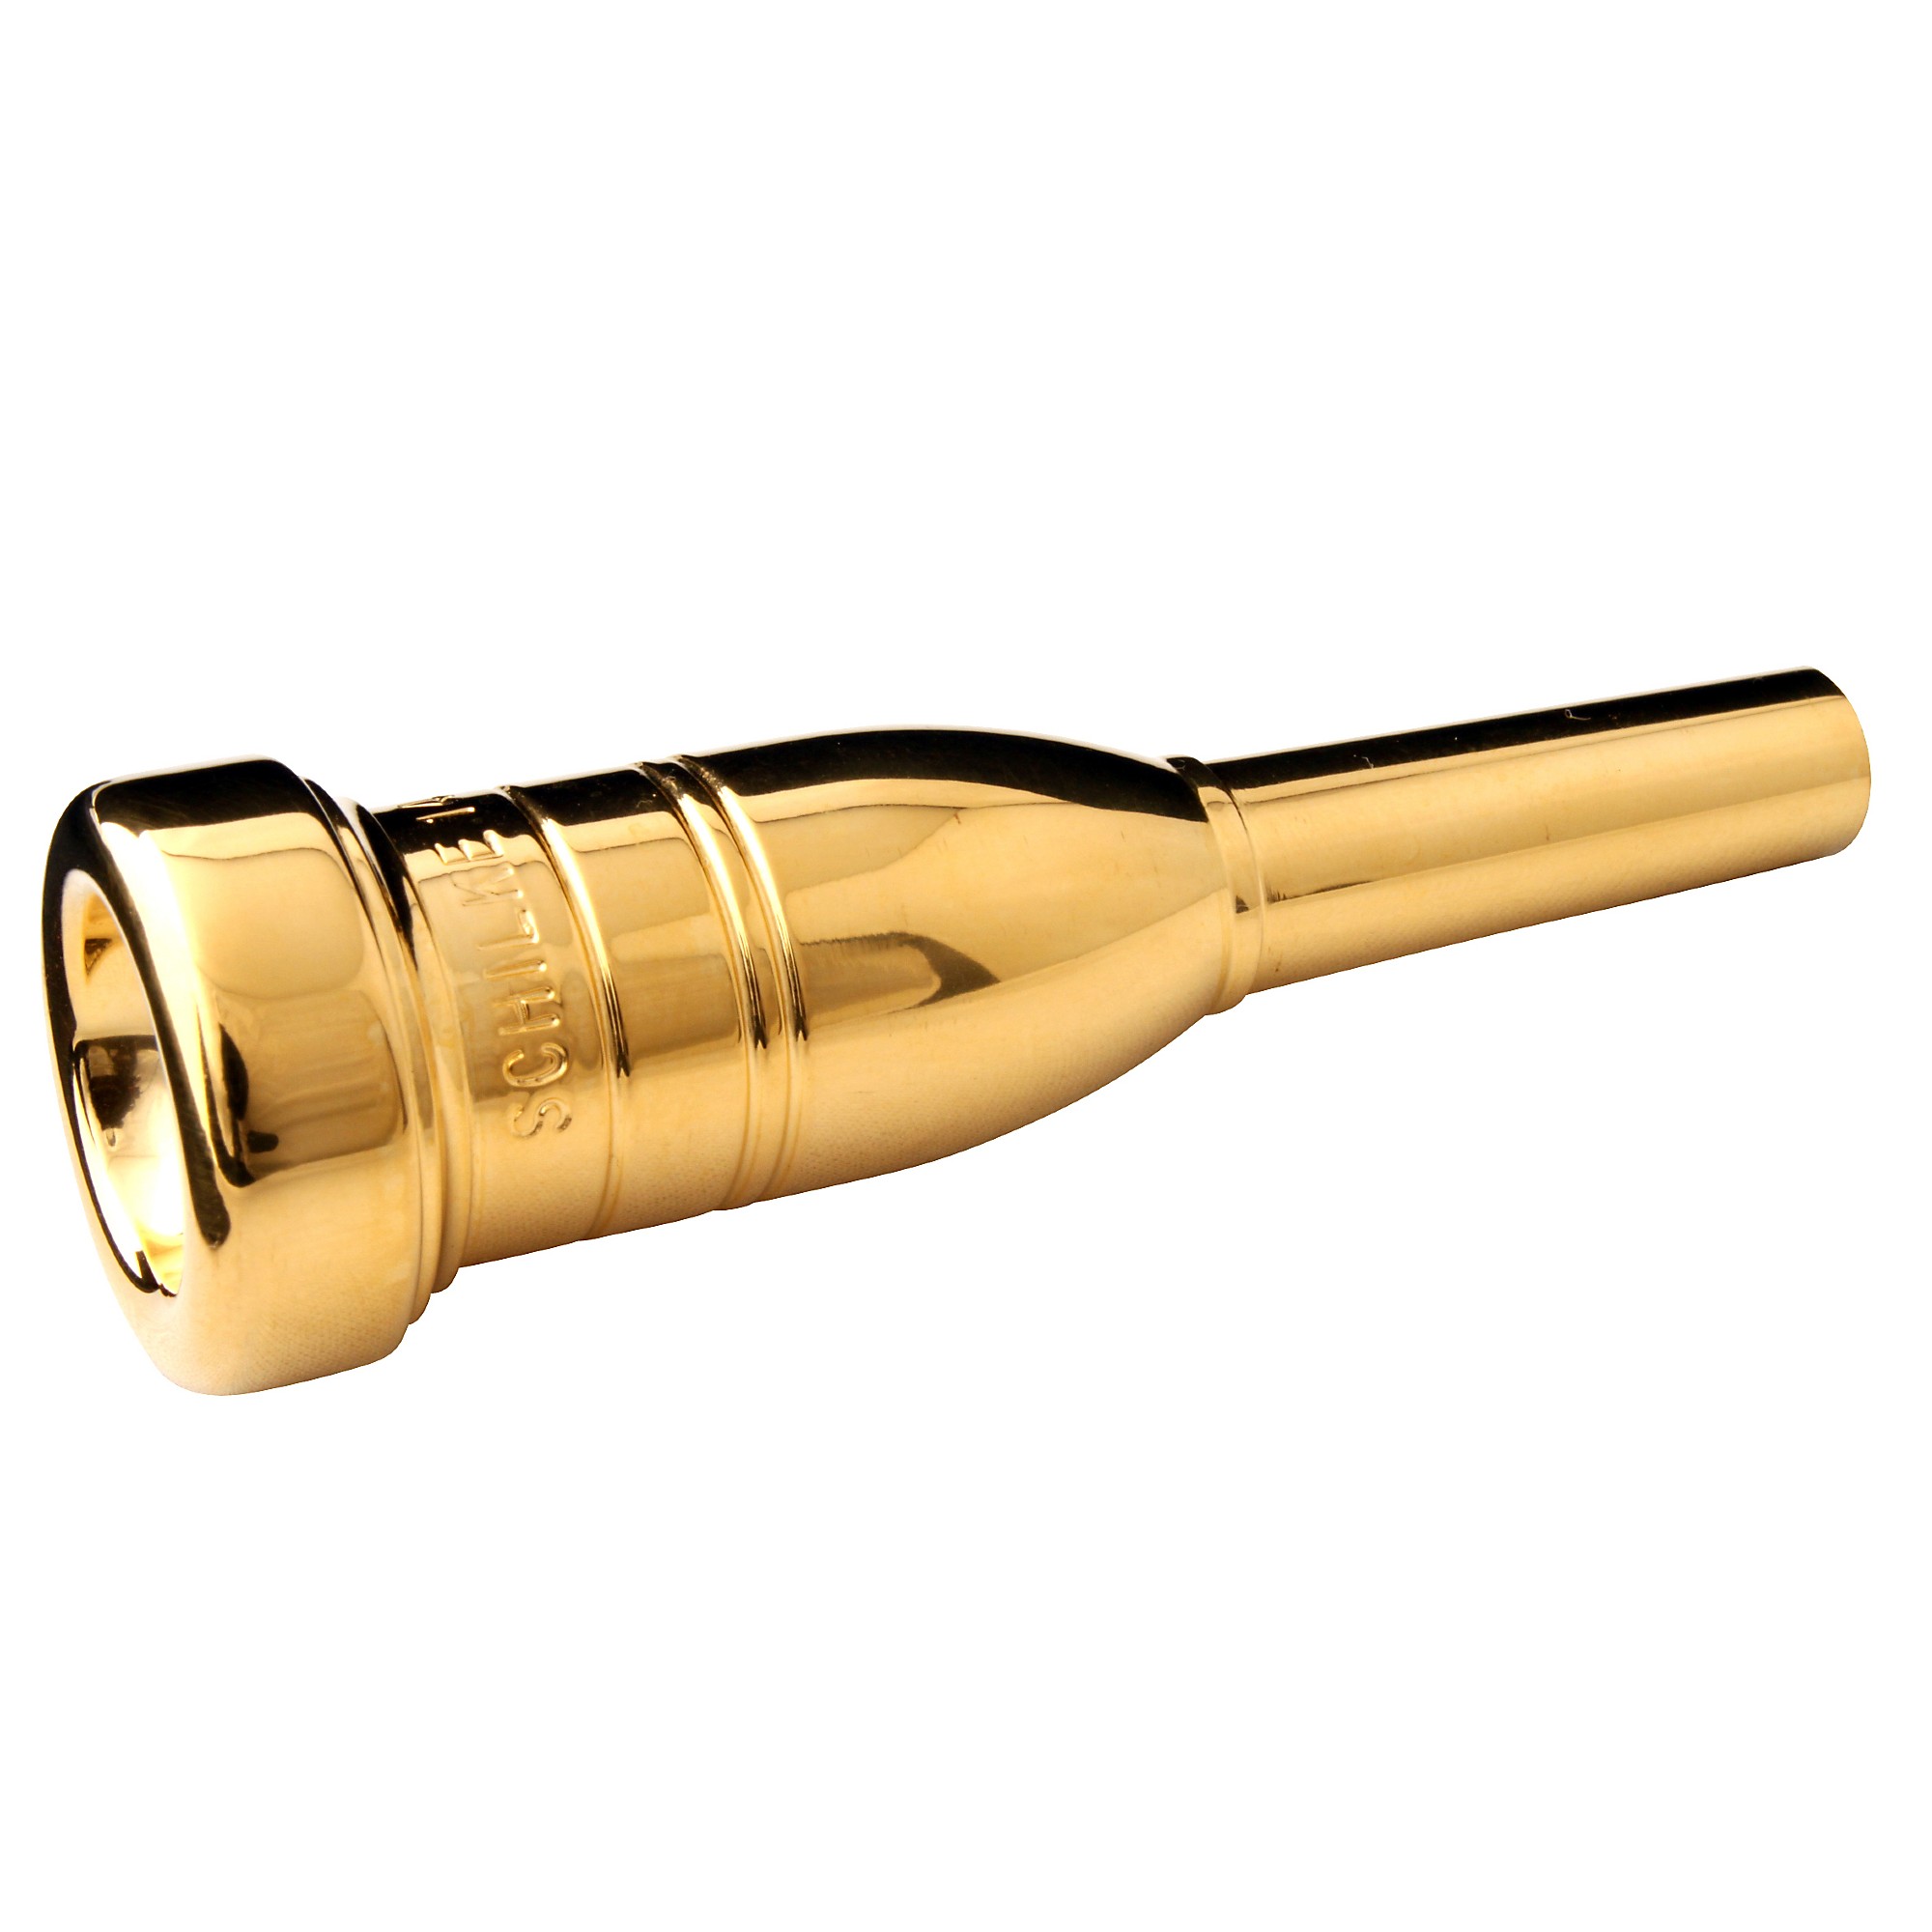  Schilke Trumpet Mouthpiece 12A4a : Musical Instruments